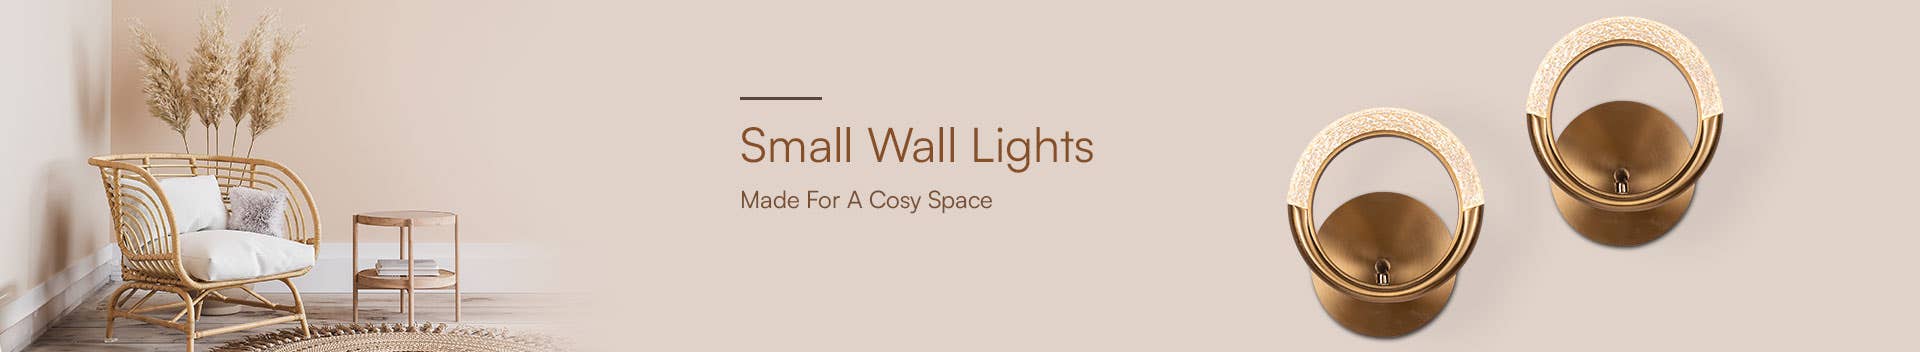 Small Wall Lights